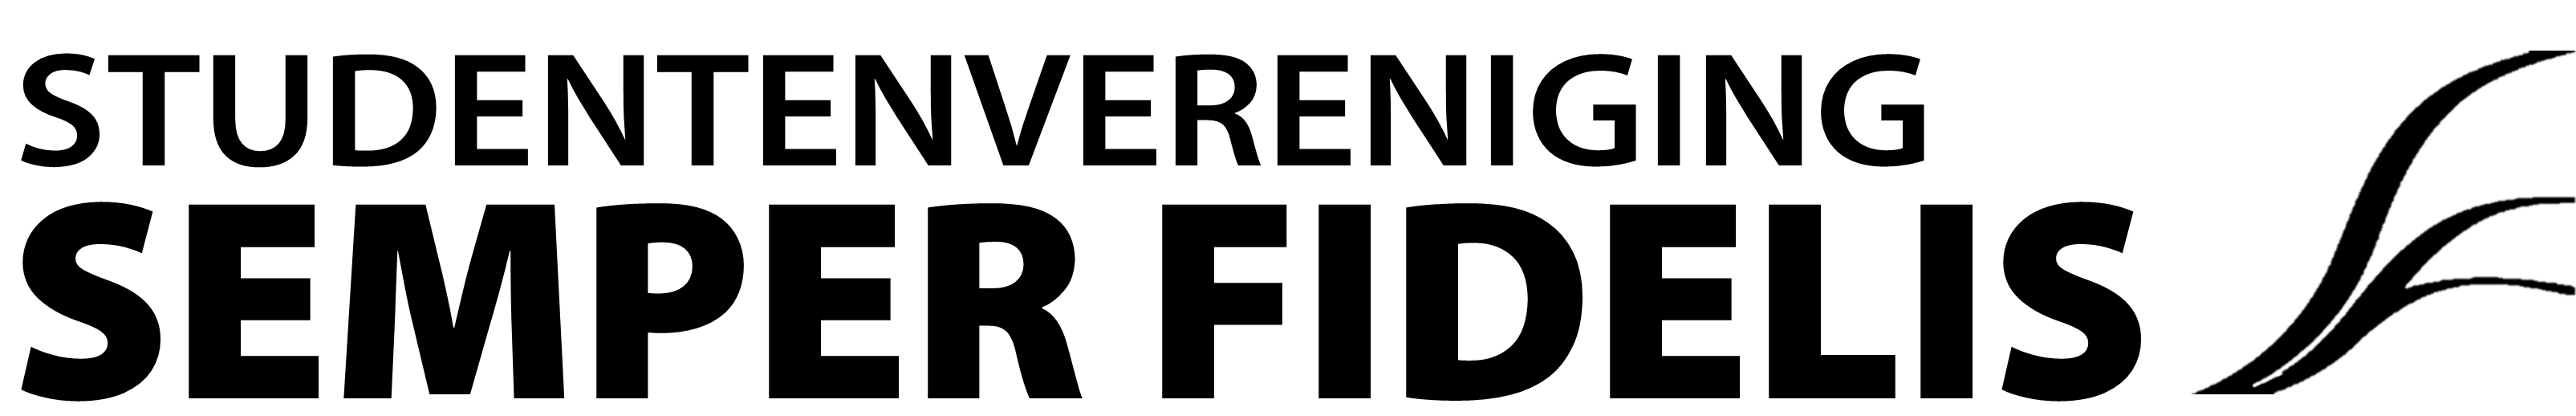 Logo der Semper Fidelis